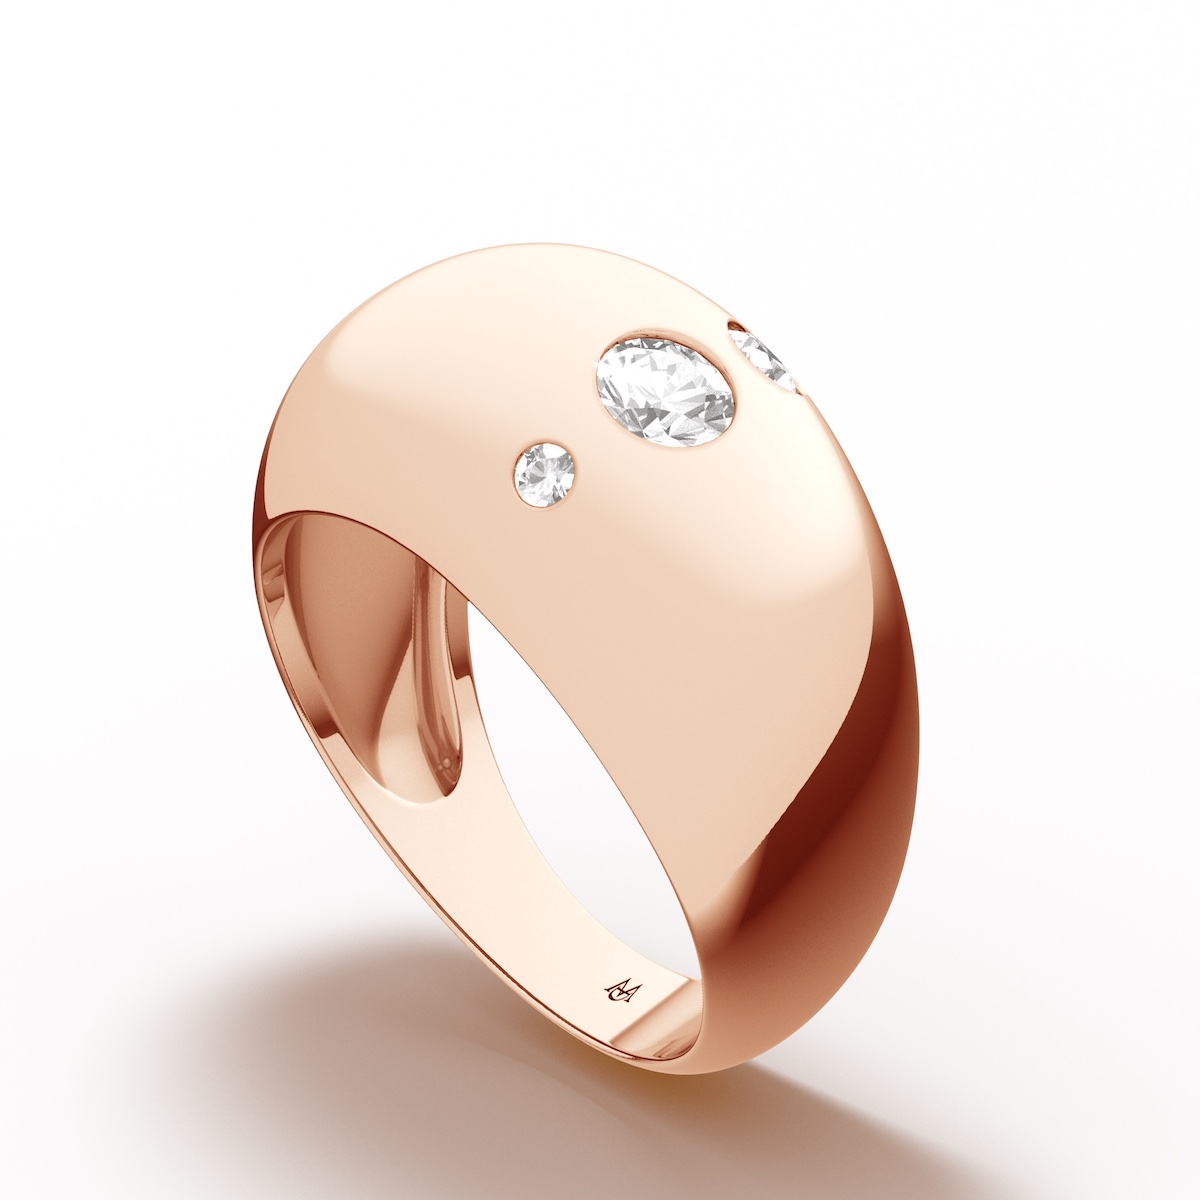 gemist dorian webb diamond jewelry dome ring